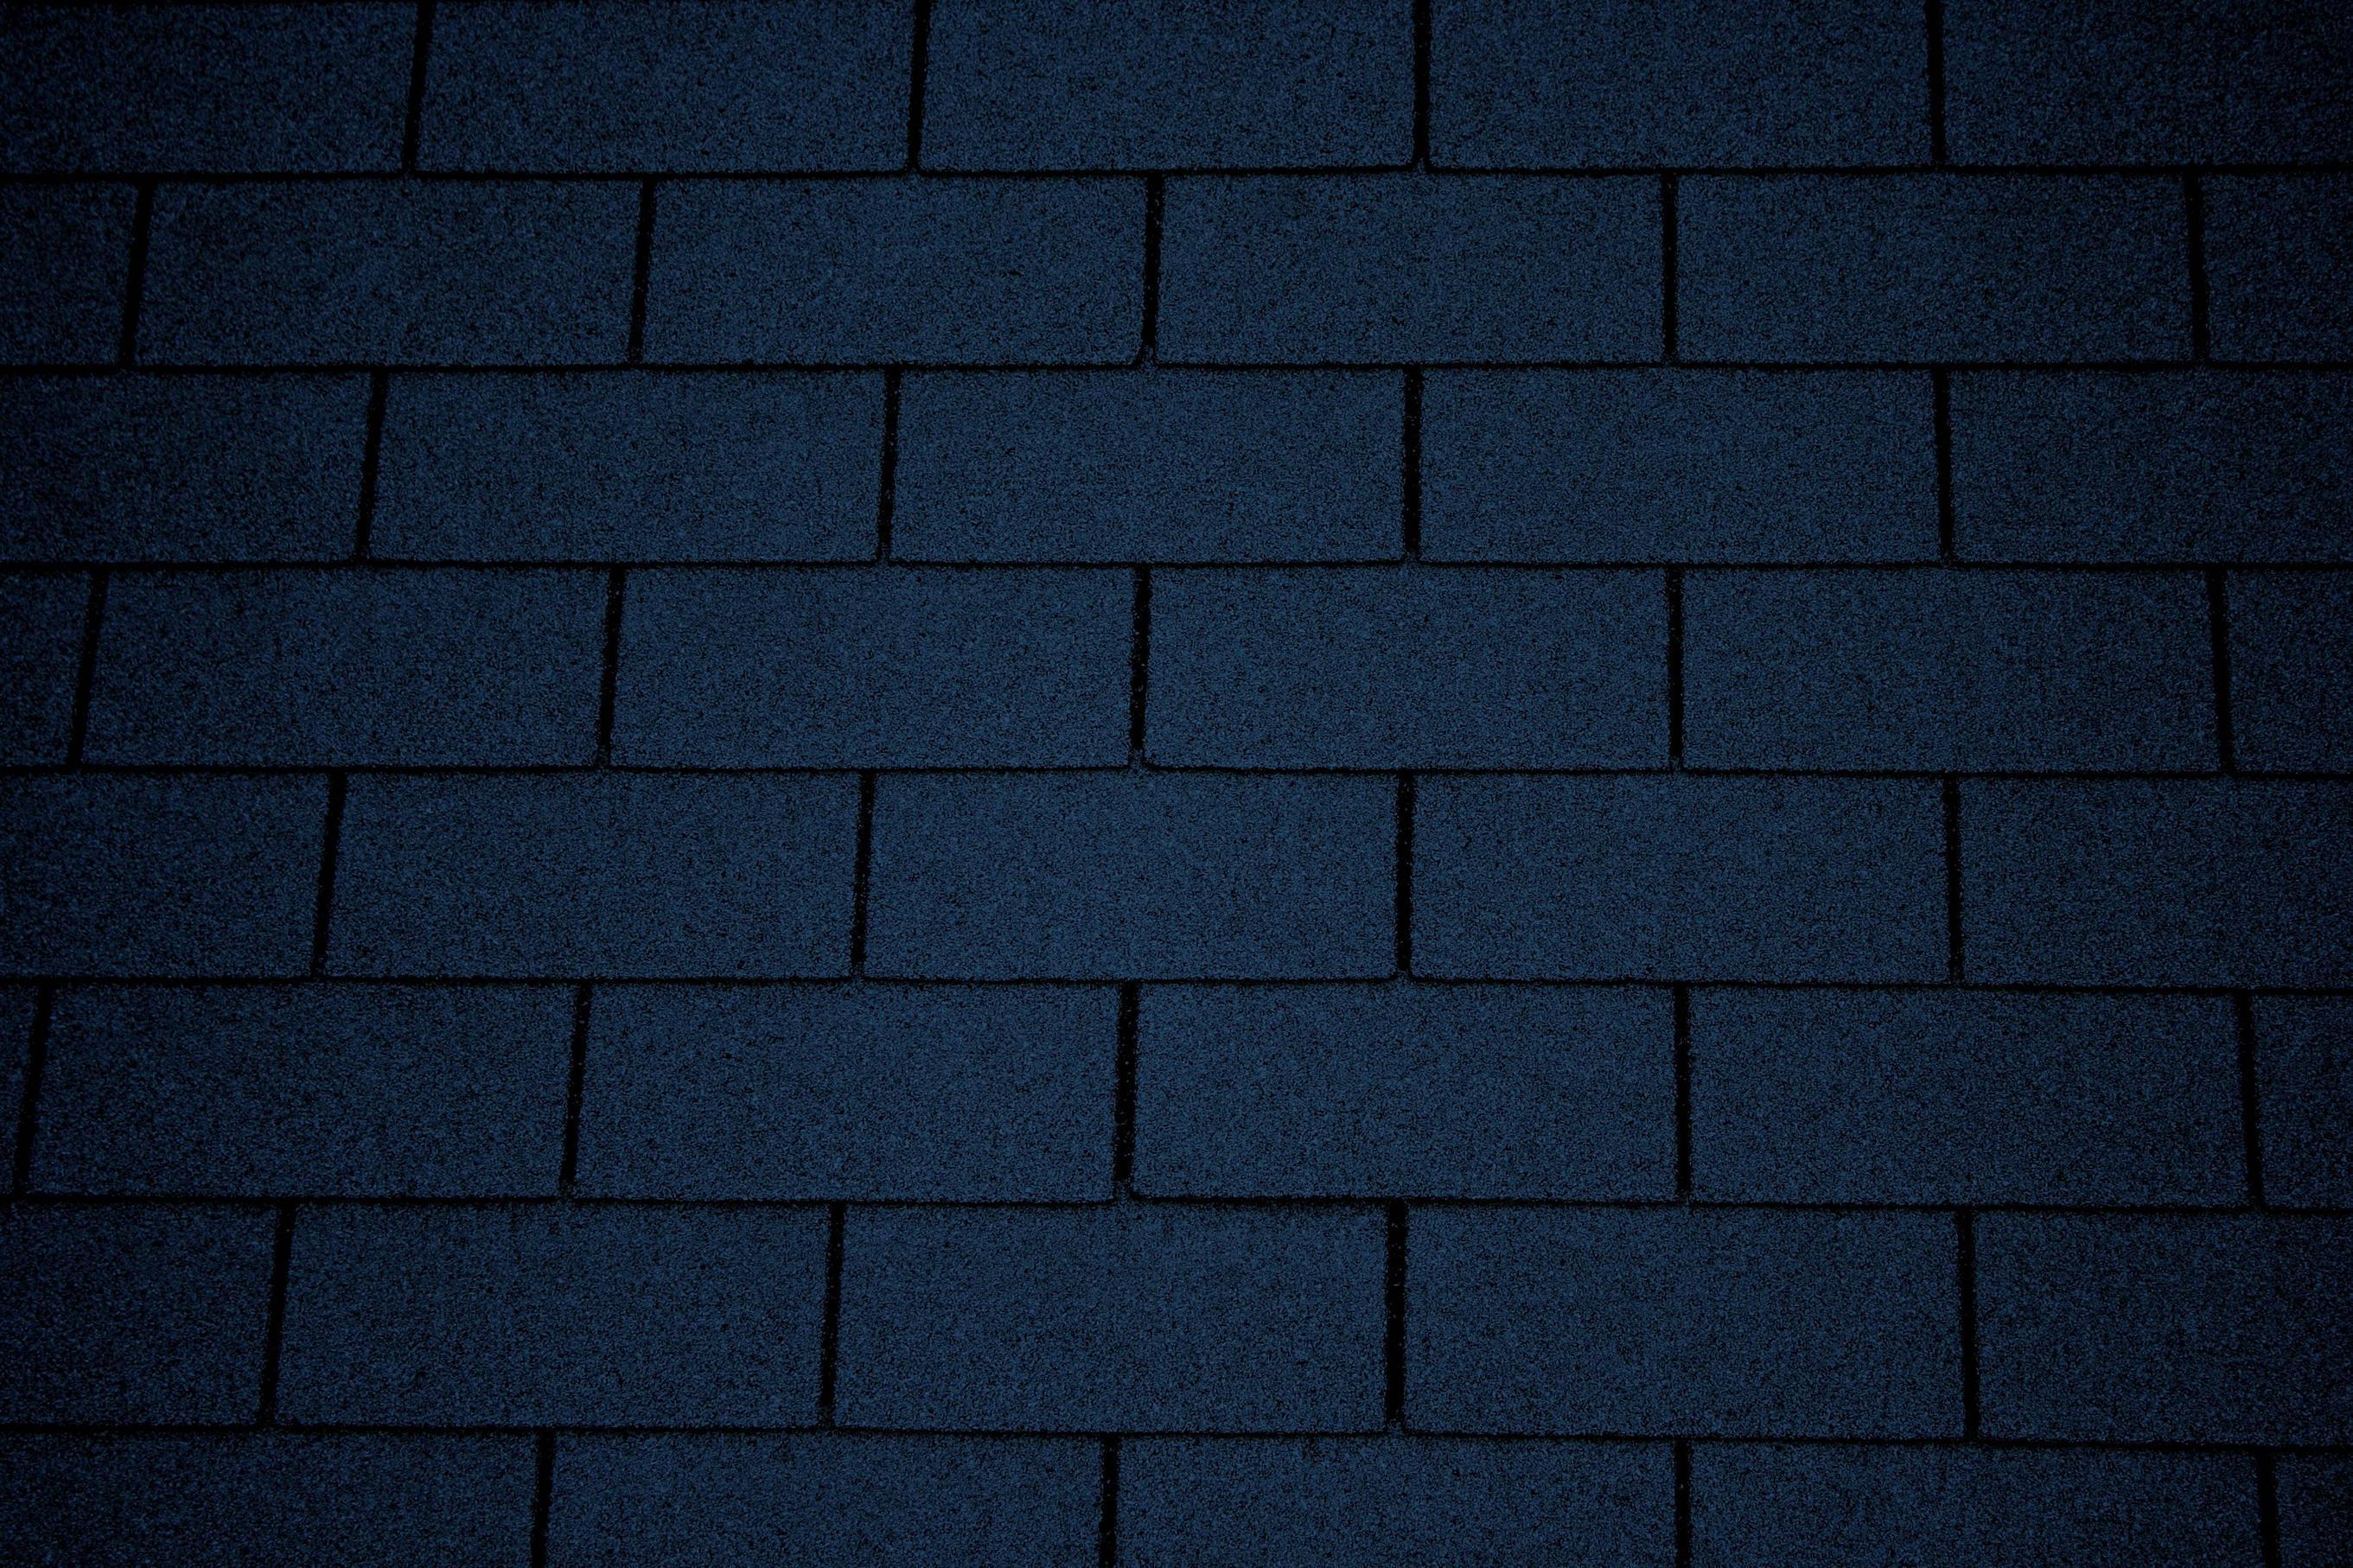 Dark Blue Asphalt Roof Shingles Texture Picture. Free Photograph